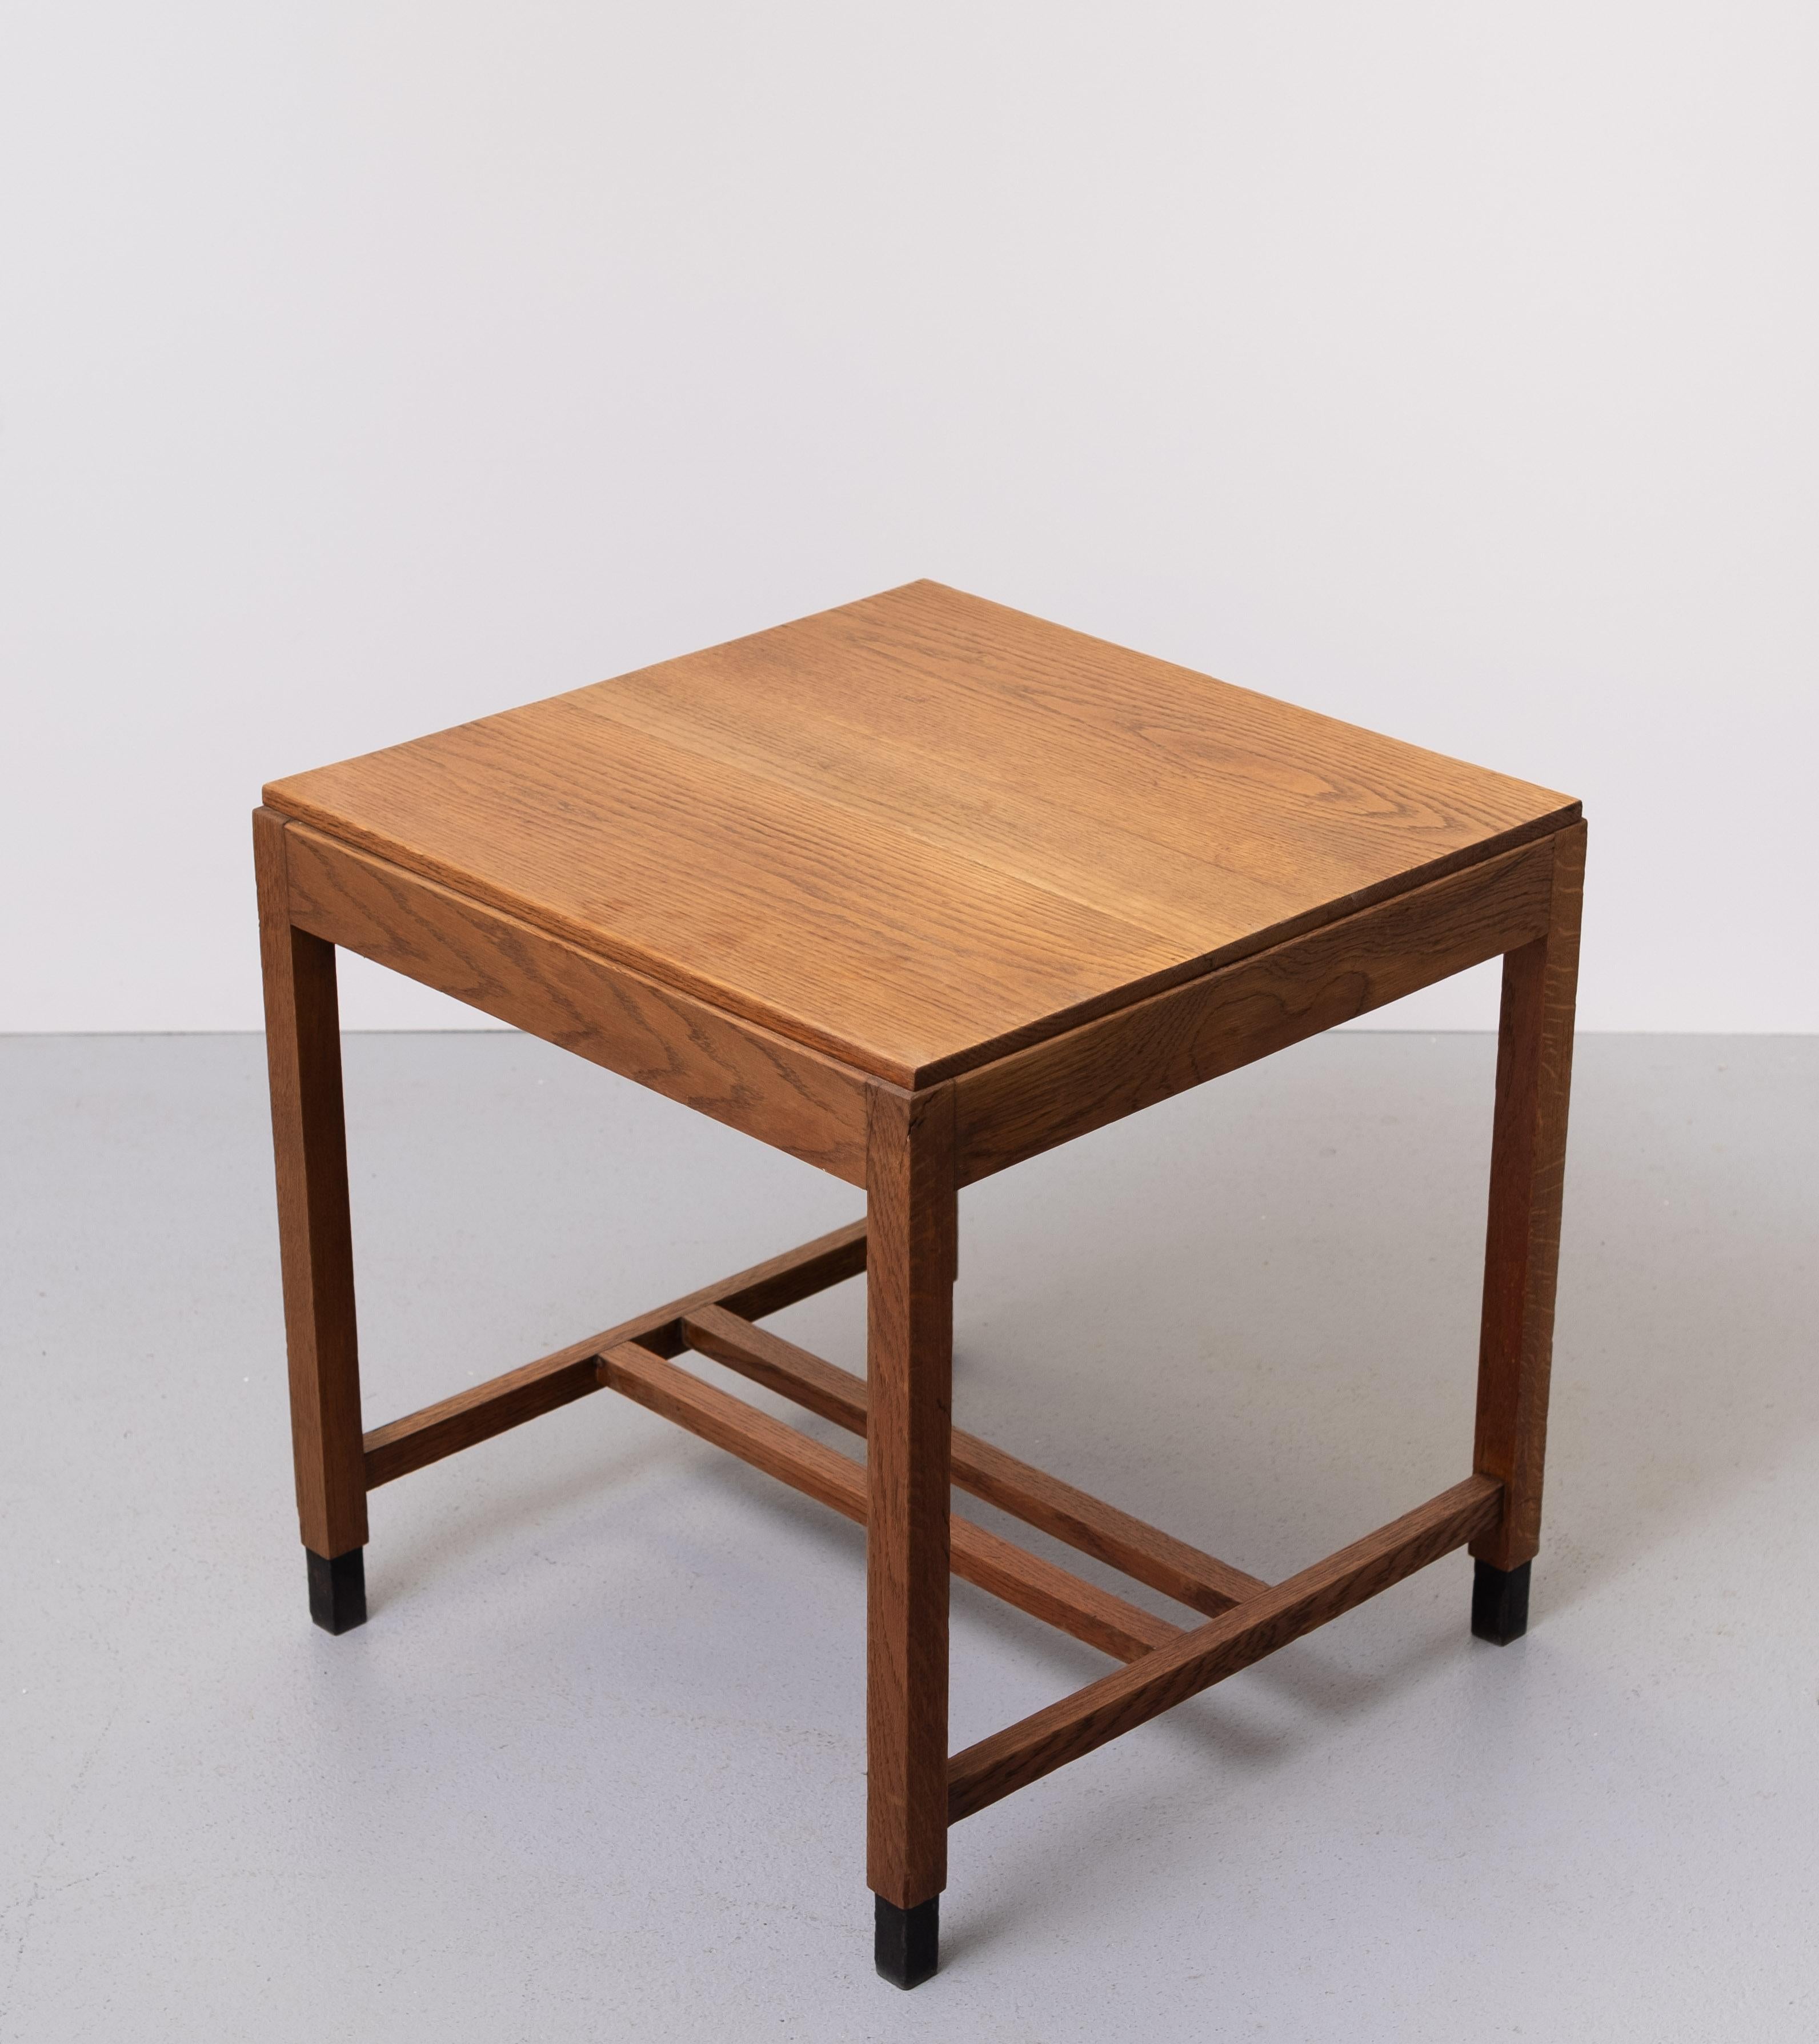 Early 20th Century Amsterdamse School  Oak writing table  Dutch Art Deco  1930s  For Sale